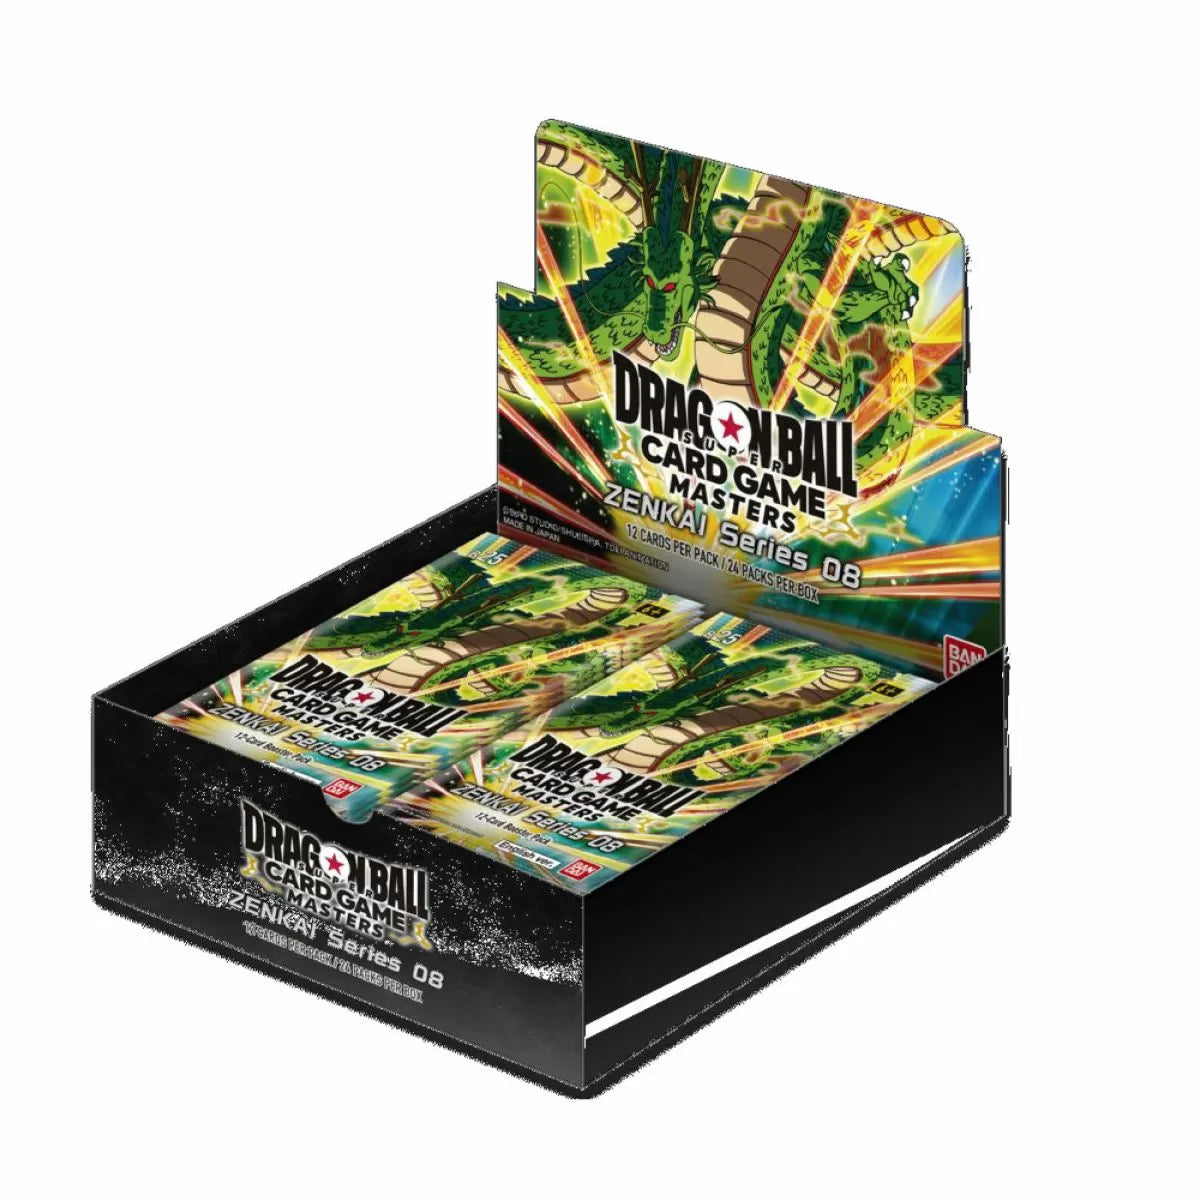 PRE ORDER - Dragon Ball Super Card Game EX Set 08 Booster Box [B25]